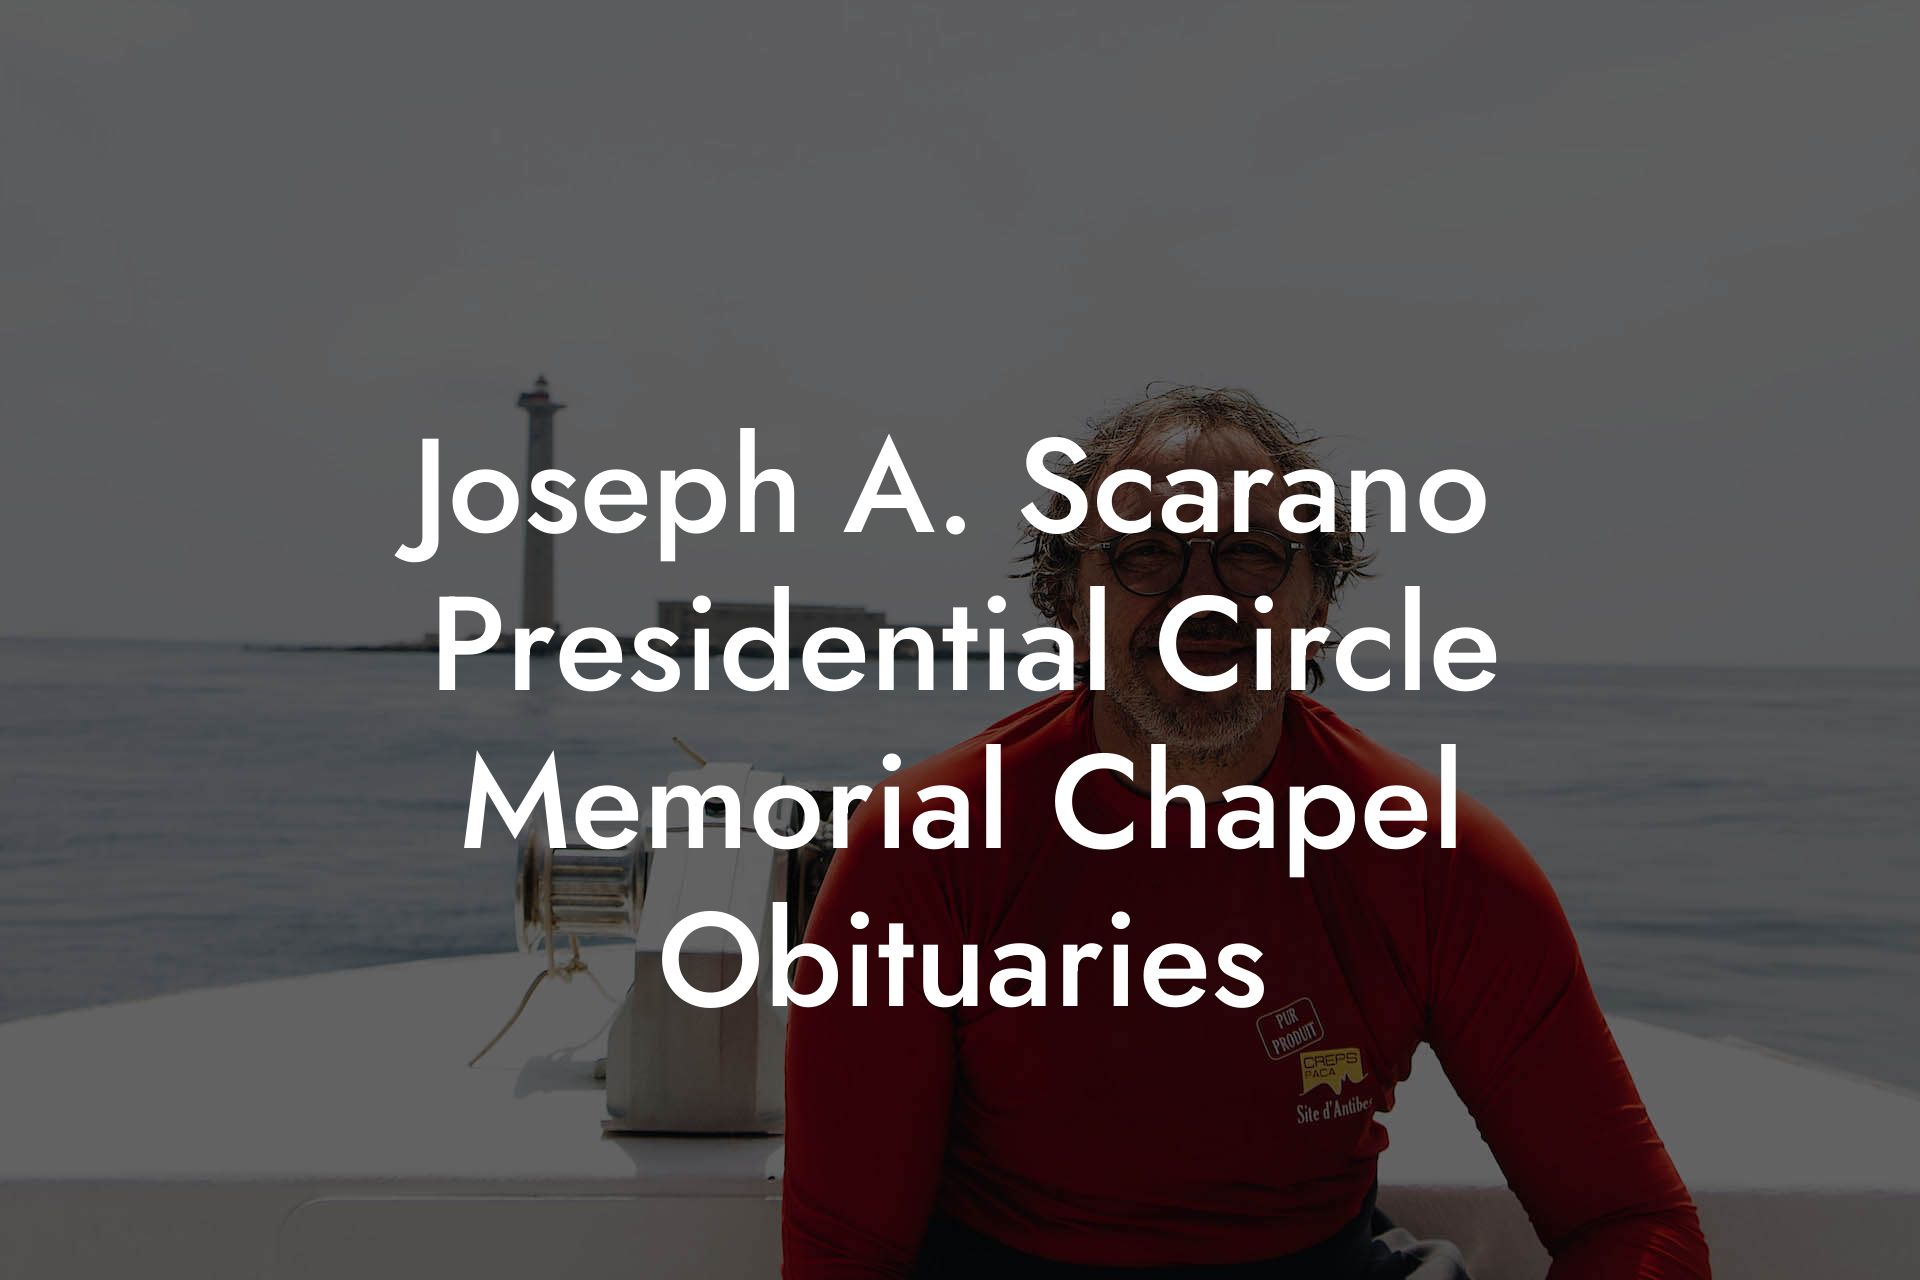 Joseph A. Scarano Presidential Circle Memorial Chapel Obituaries